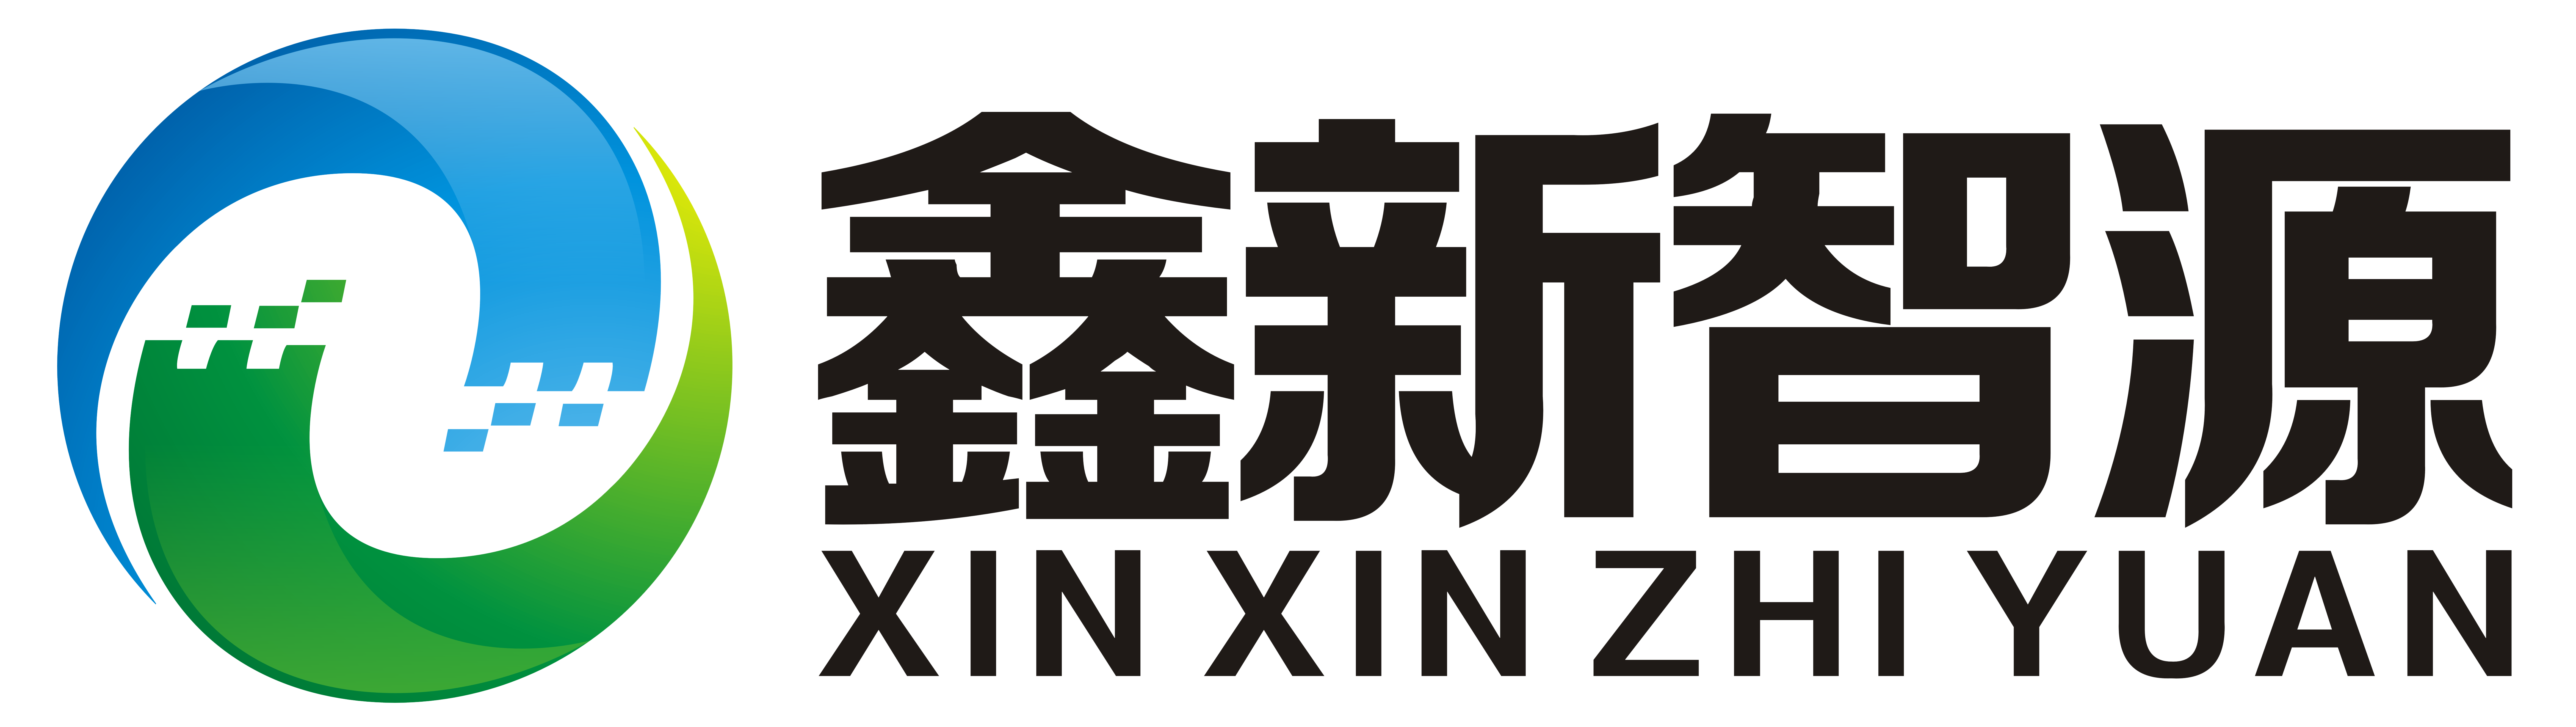 SHENZHEN XINXINZHIYUAN TECHNOLOGY CO., LTD.